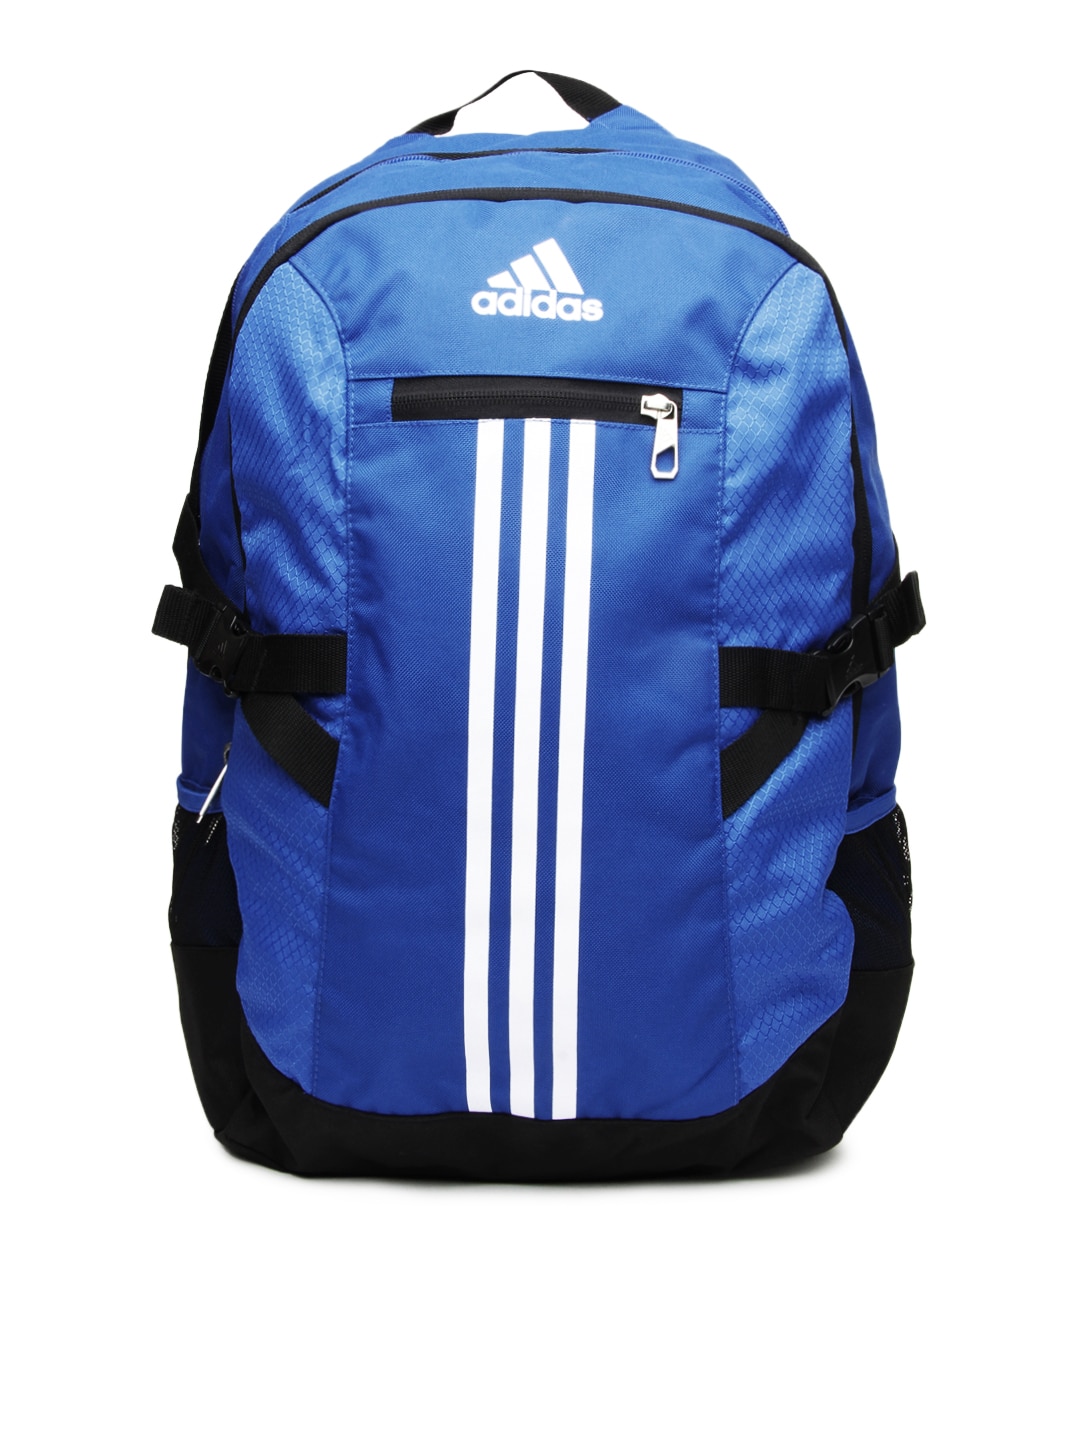 adidas backpack blue